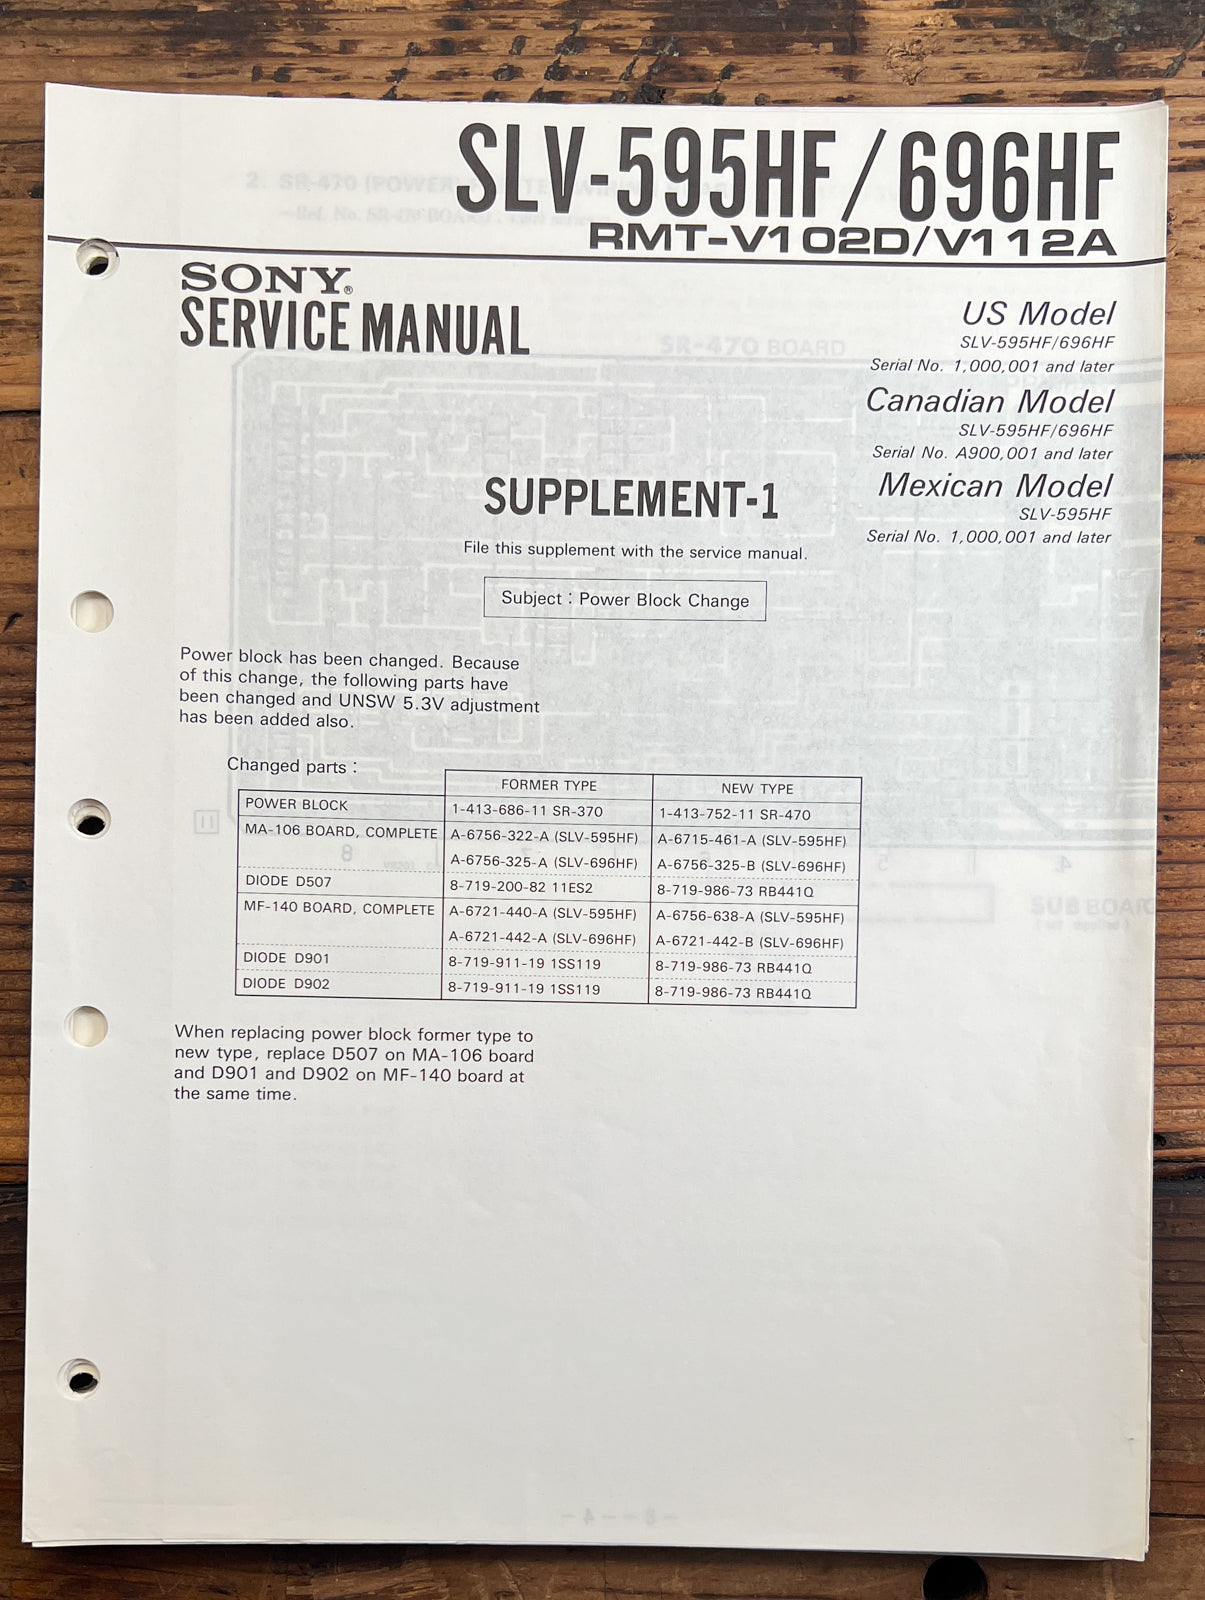 Sony SLV-595HF -696HF  Supp Service Manual *Original*